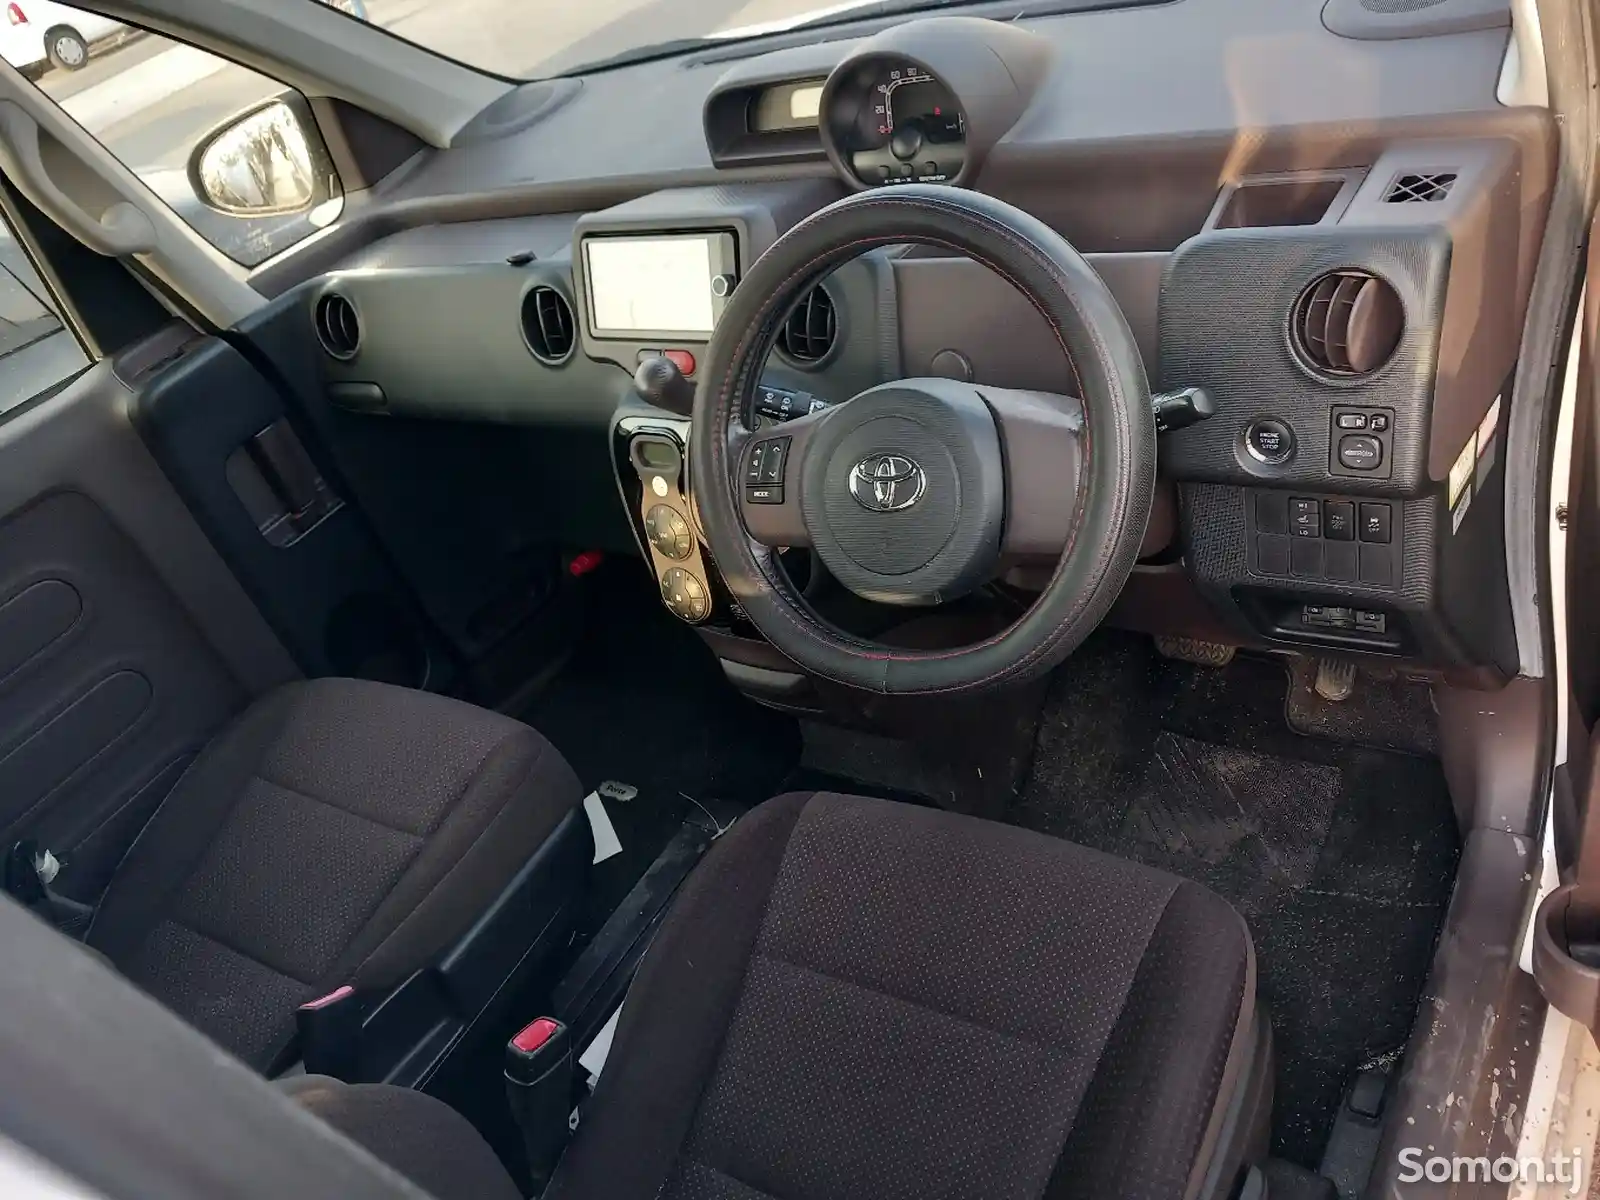 Toyota Rumion, 2014-8